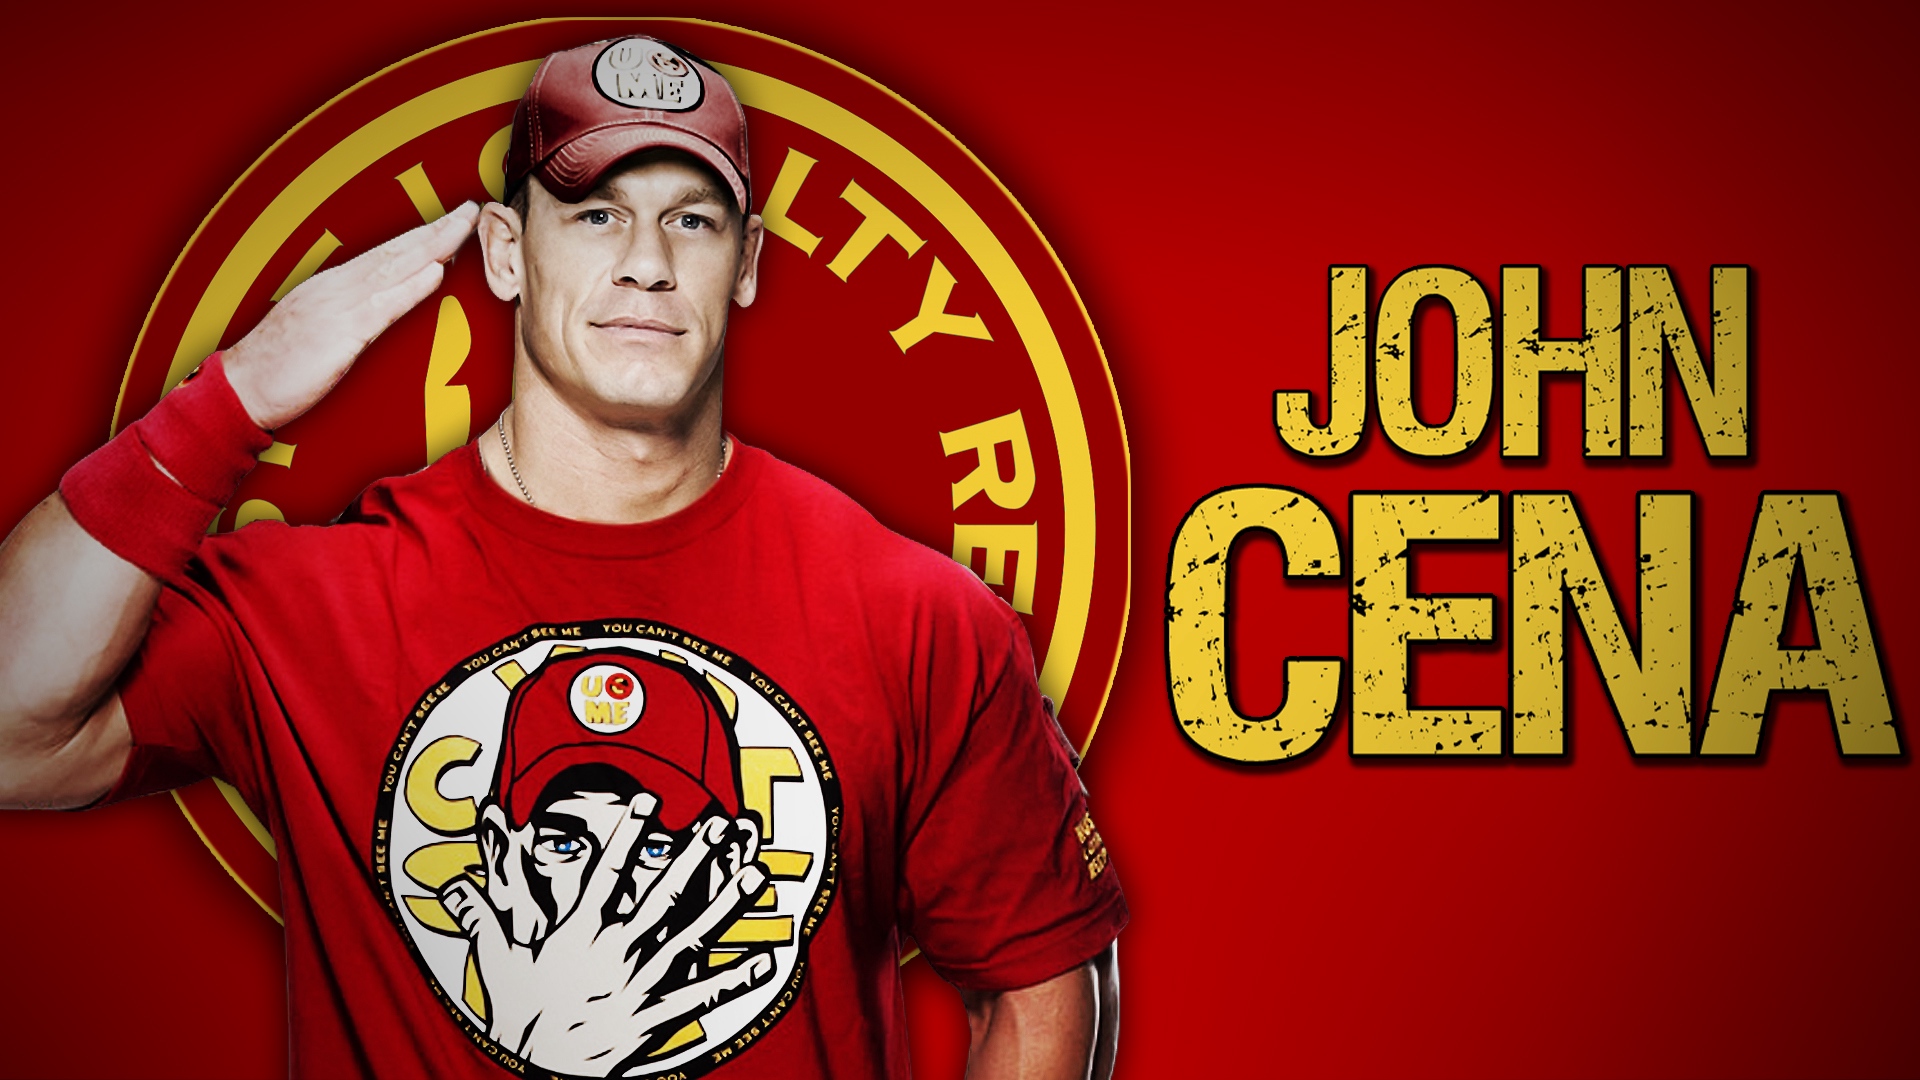 Wallpaper John Cena, Wrestler, Rapper, Actor, Wwe - John Cena World Heavyweight Champion 2013 - HD Wallpaper 